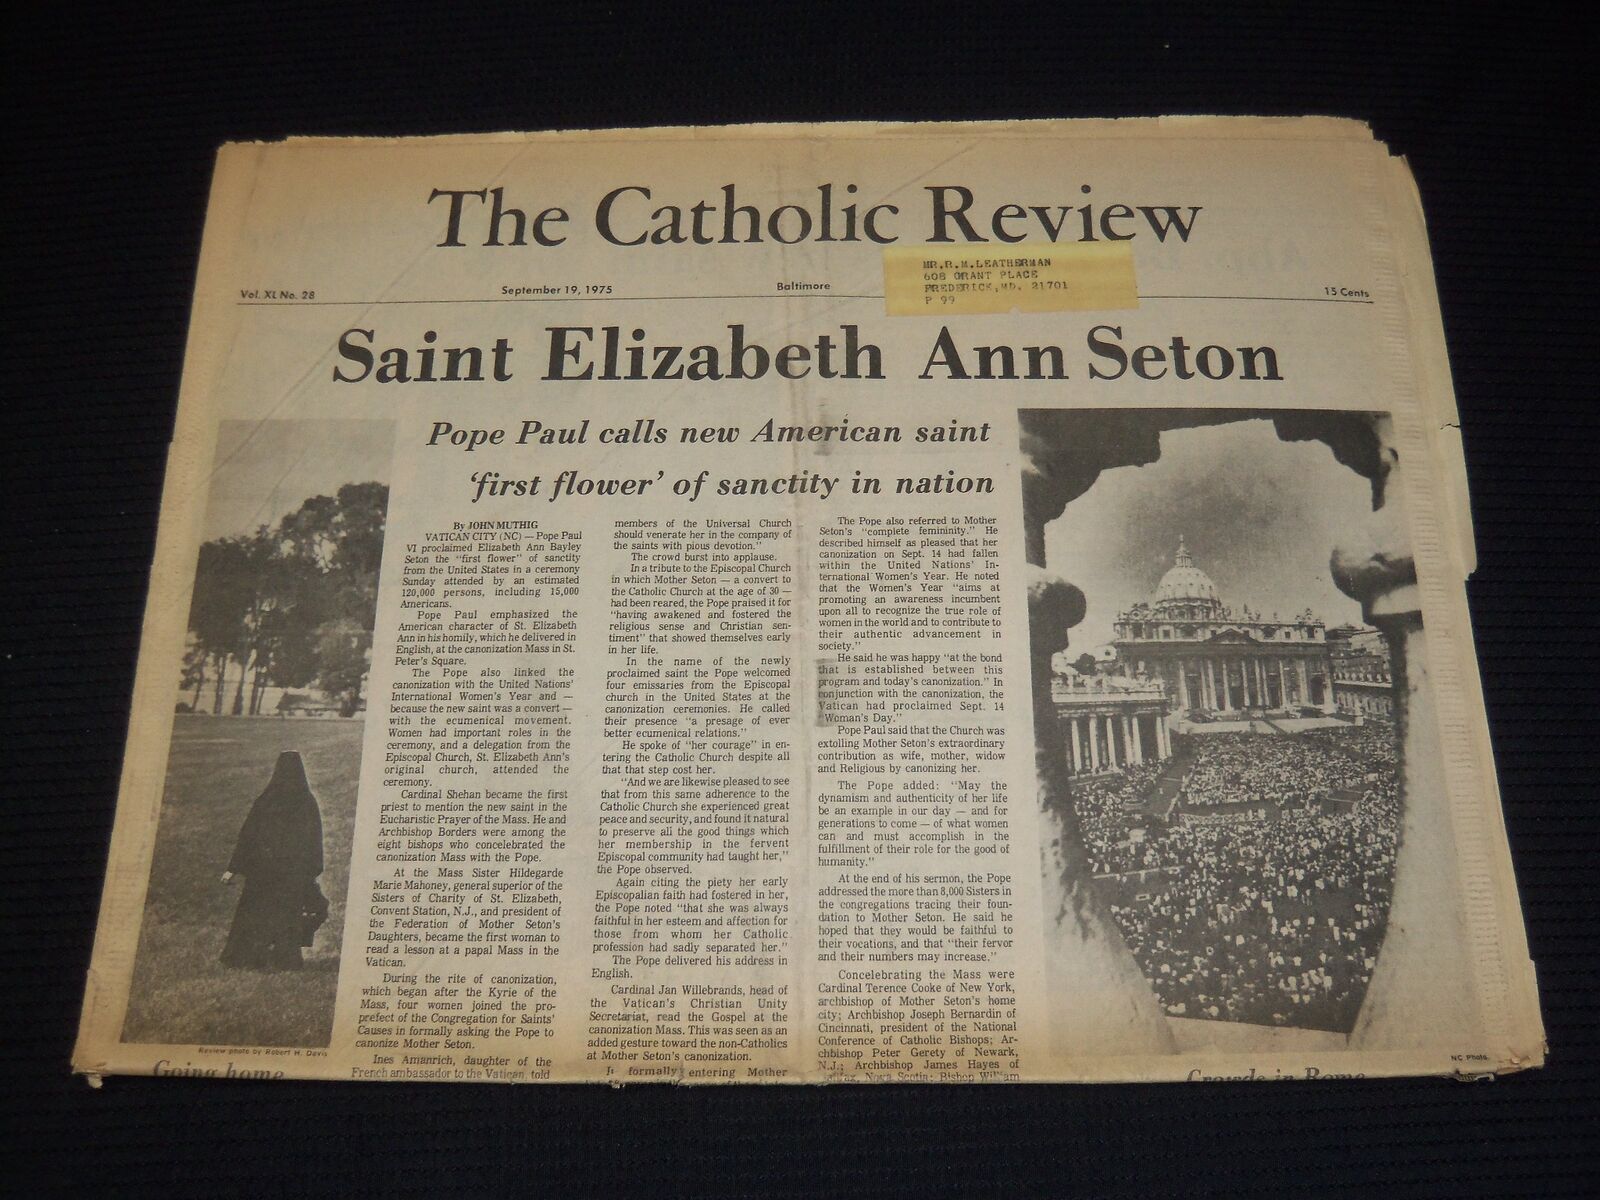 1975 SEPTEMBER 19 THE CATHOLIC REVIEW - SAINT ELIZABETH ANN SETON - NP 1847R